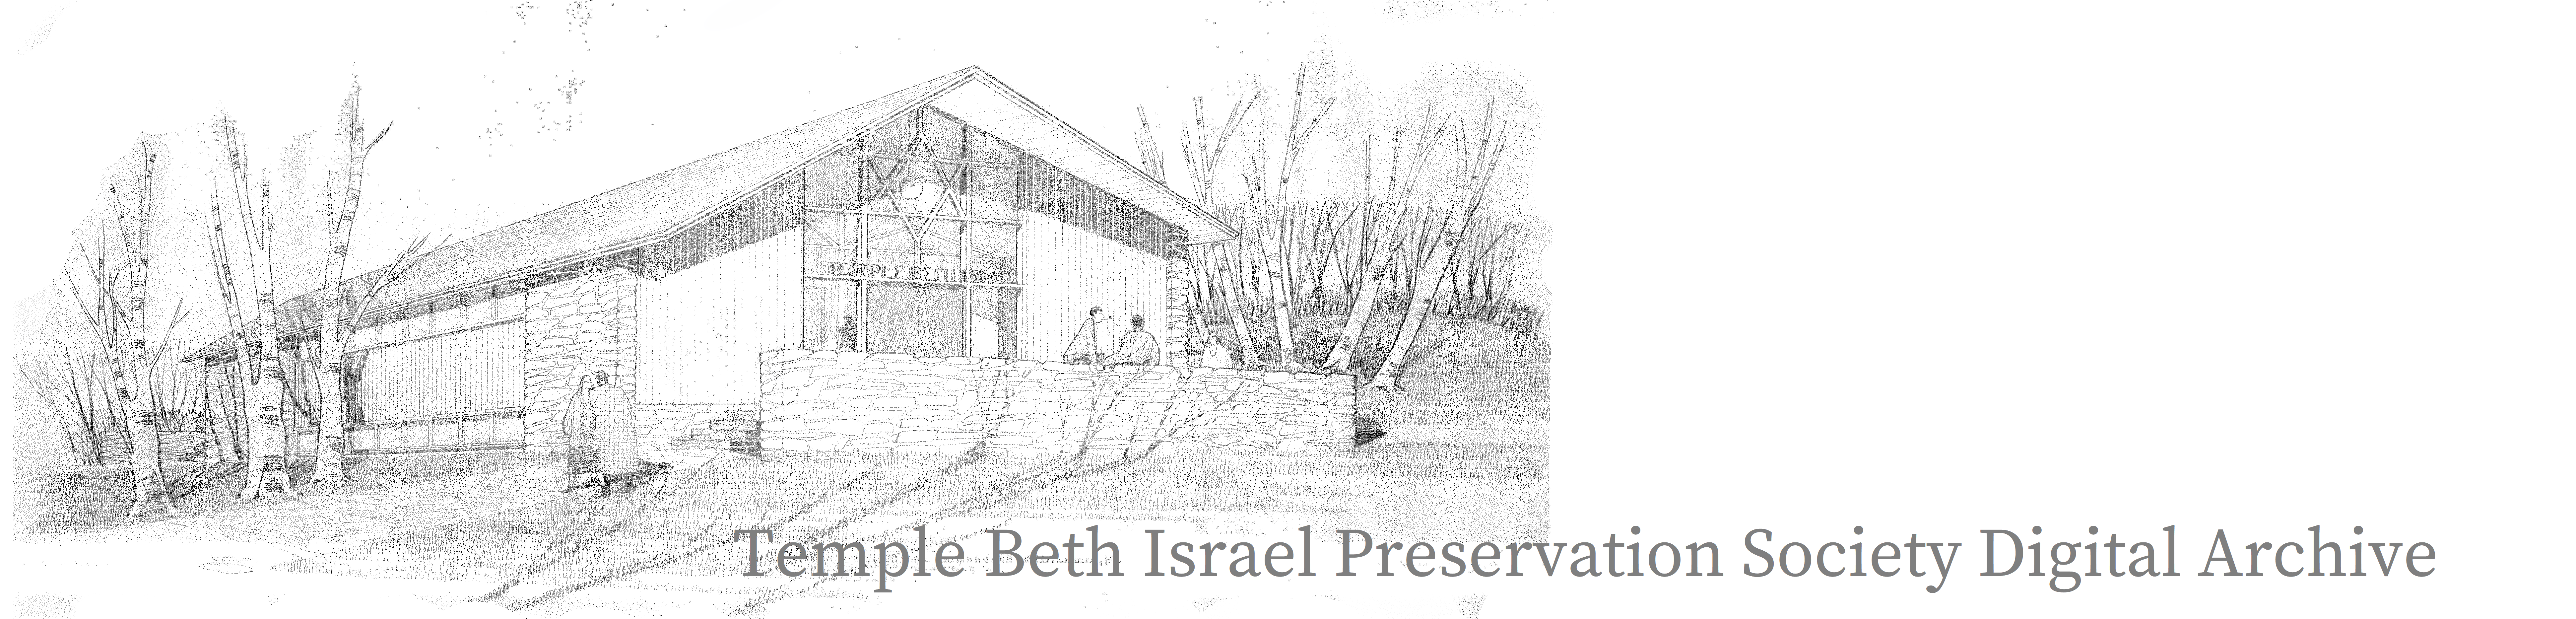 Temple Beth Israel Digital Archive (Private Community Hub)